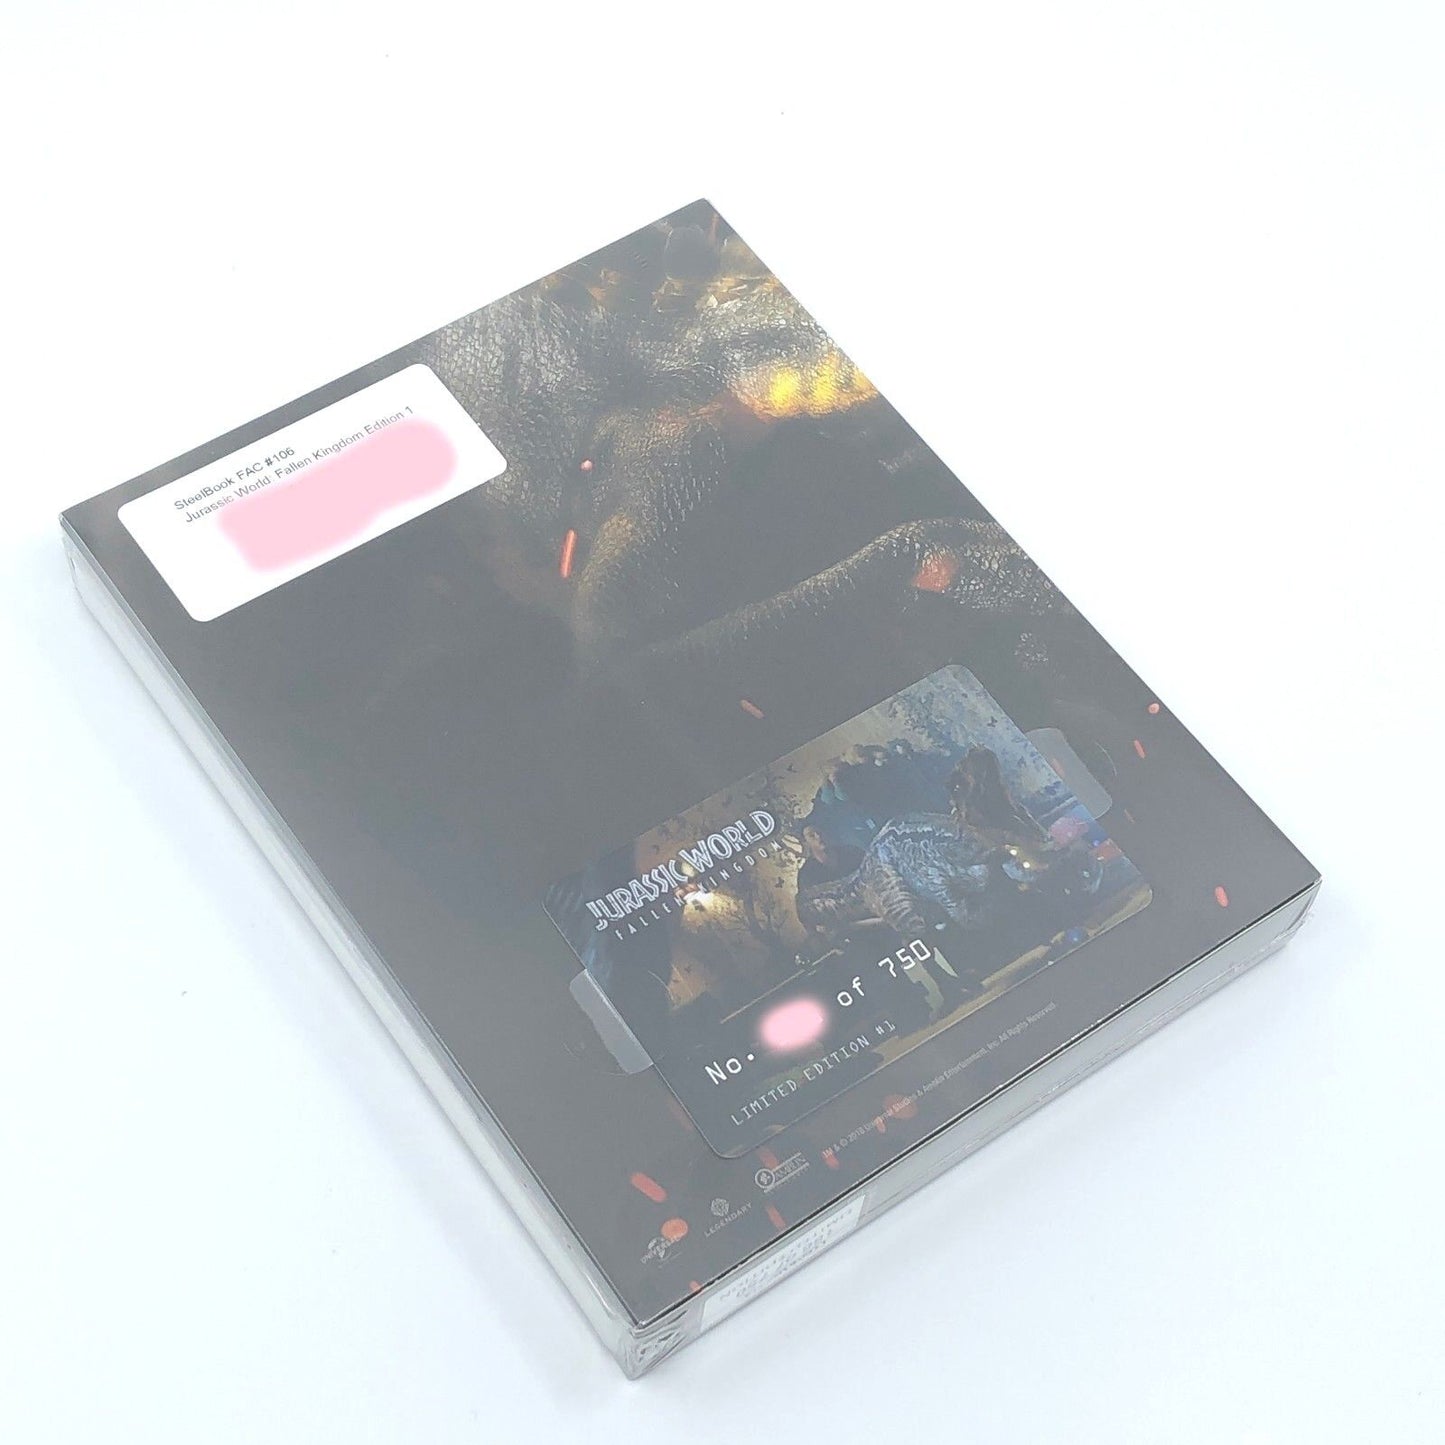 Jurassic World: Fallen Kingdom 4K+2D  Blu-ray Steelbook Filmarena Collection #106 E1 Full Slip